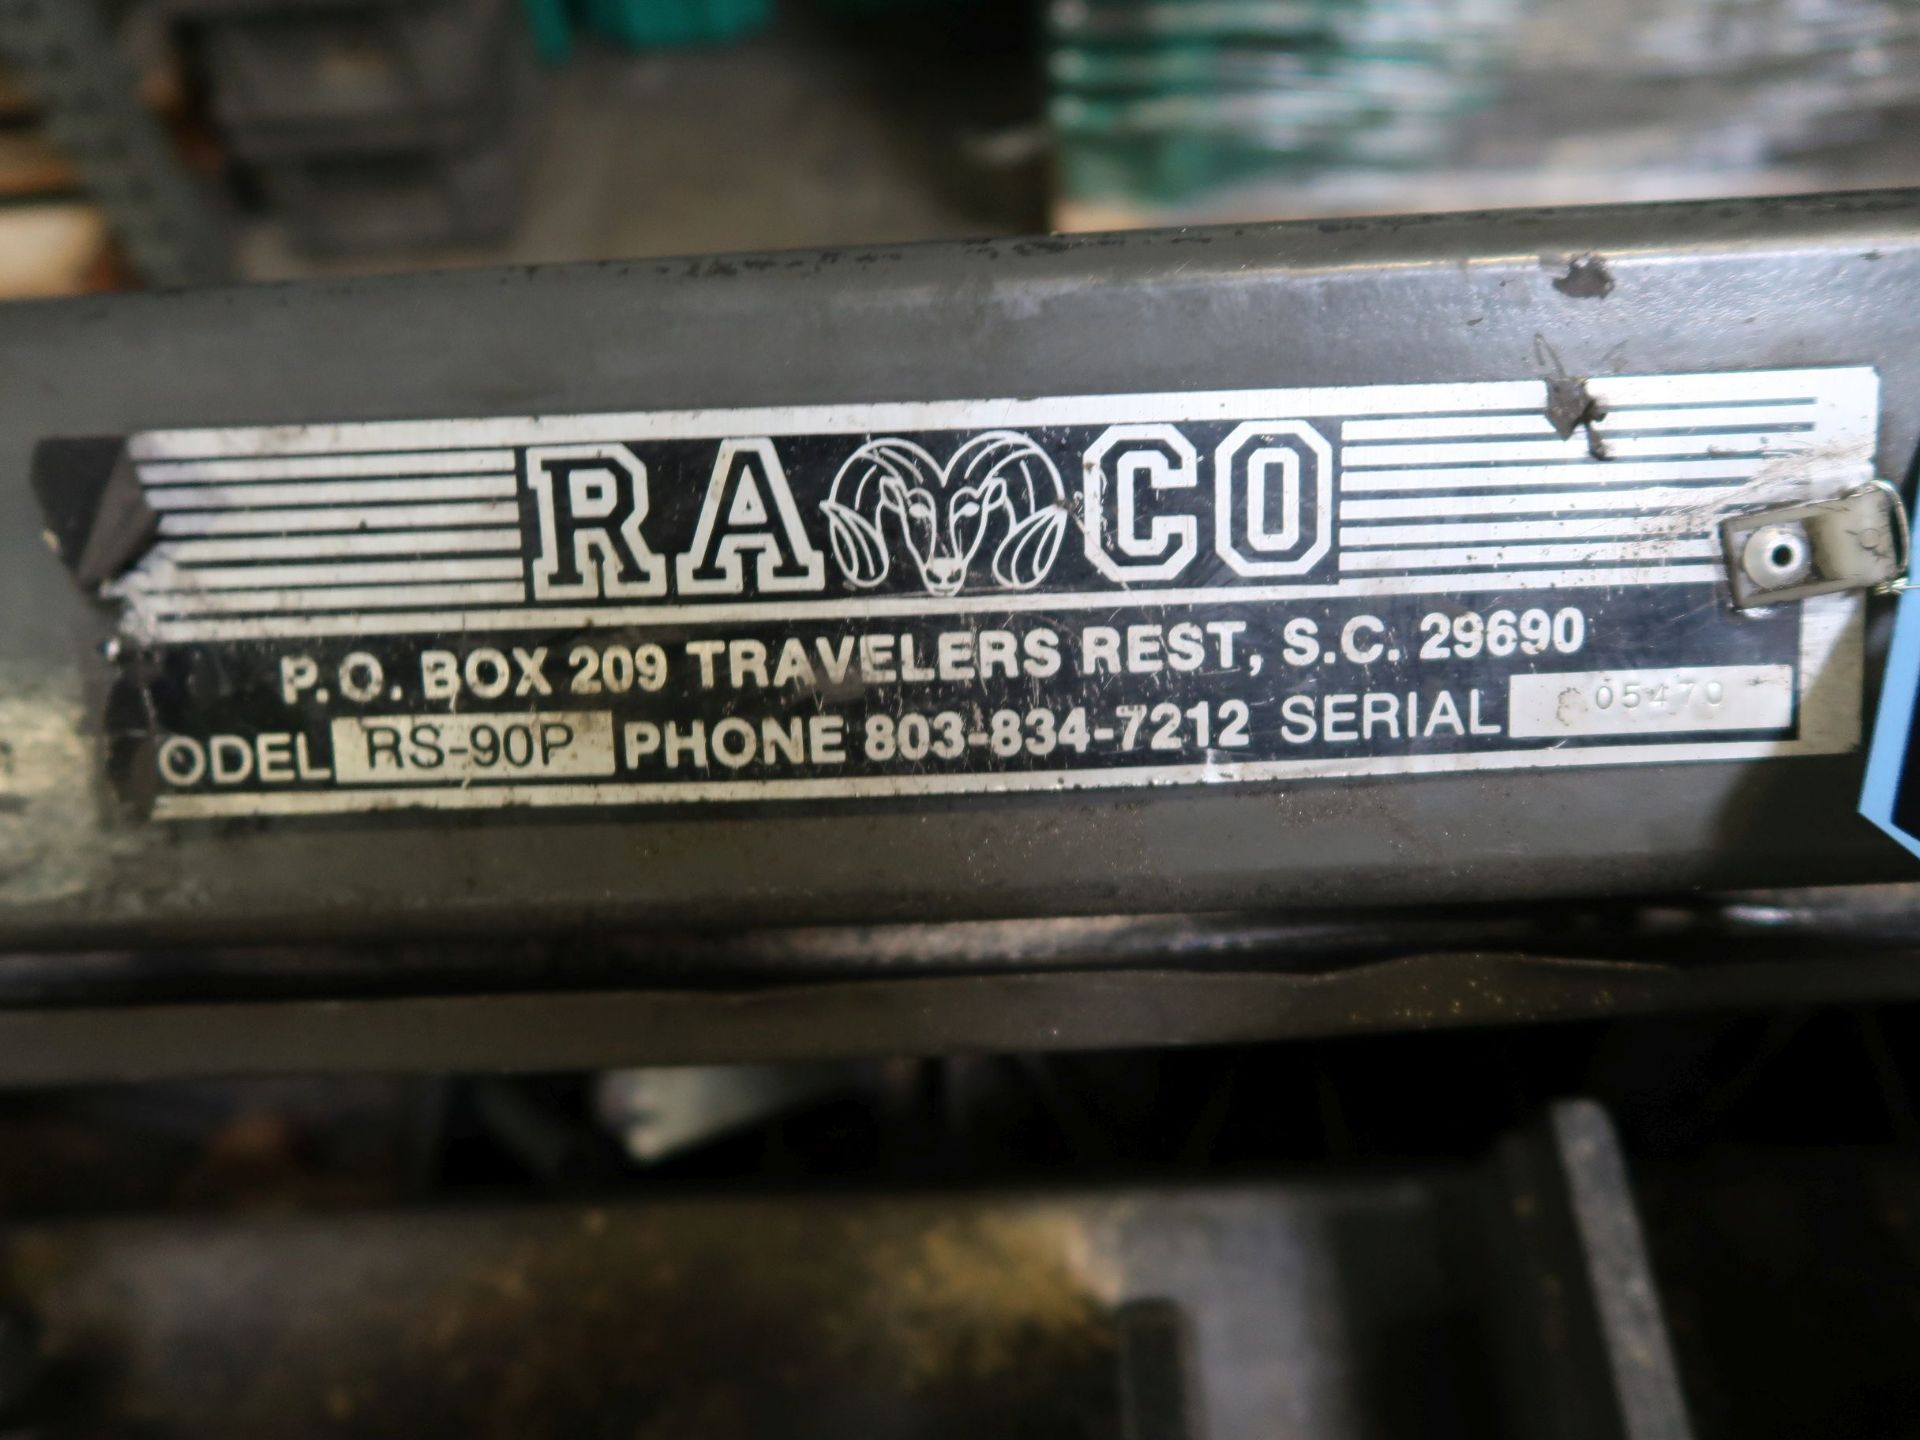 RAMCO MODEL RS-90P HORIZONTAL BAND SAW; S/N 05470 - Image 3 of 3